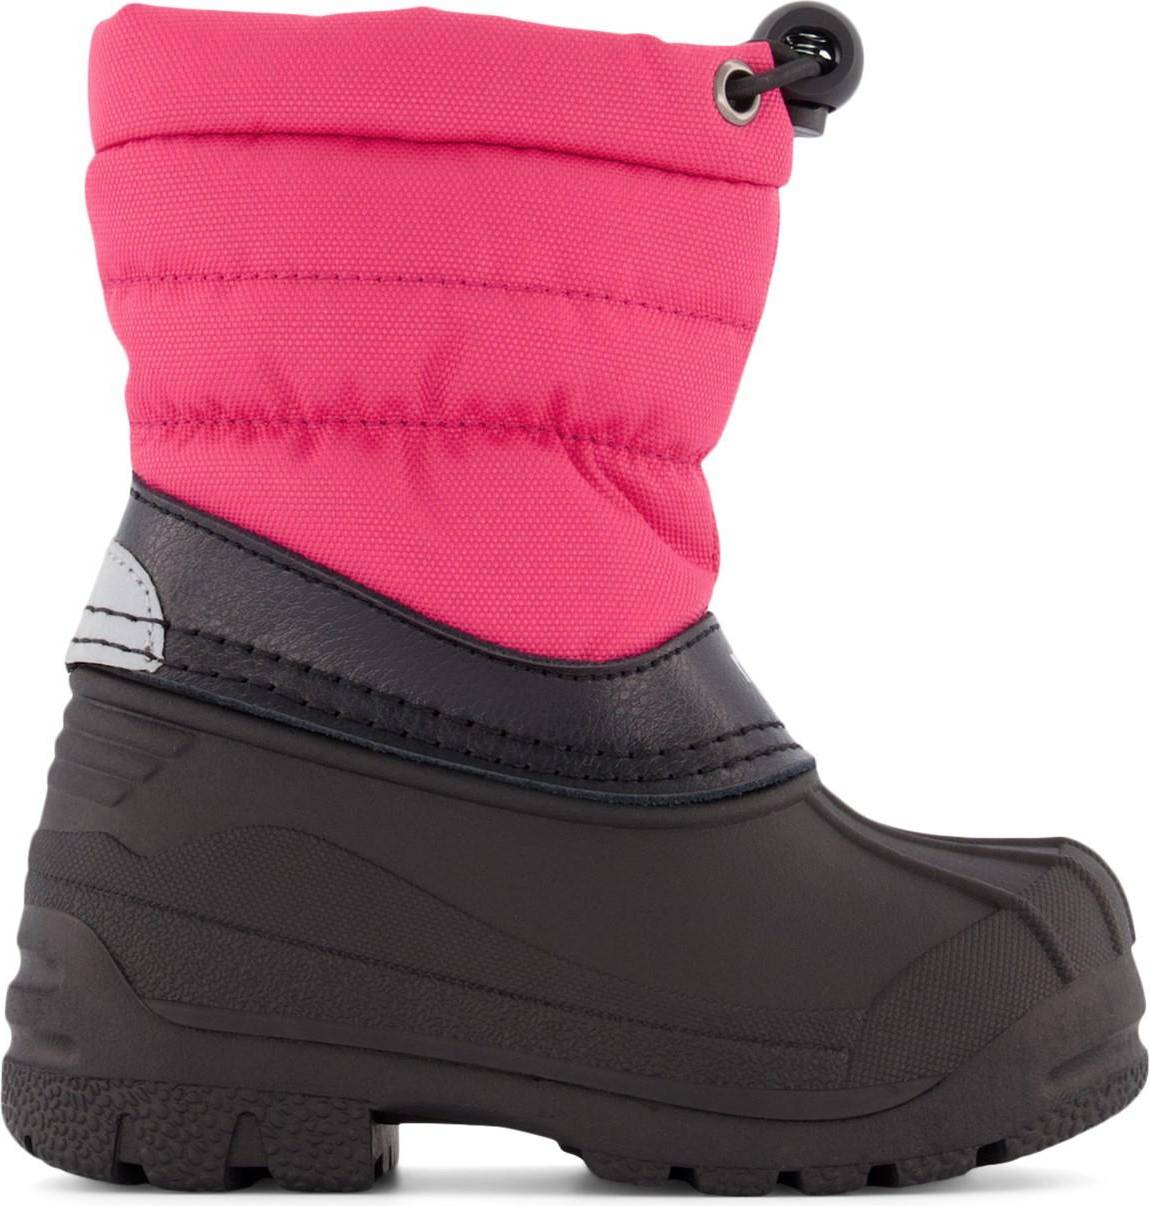  Bild på Reima Kid's Snow Boots Nefar - Azalea Pink vinterskor